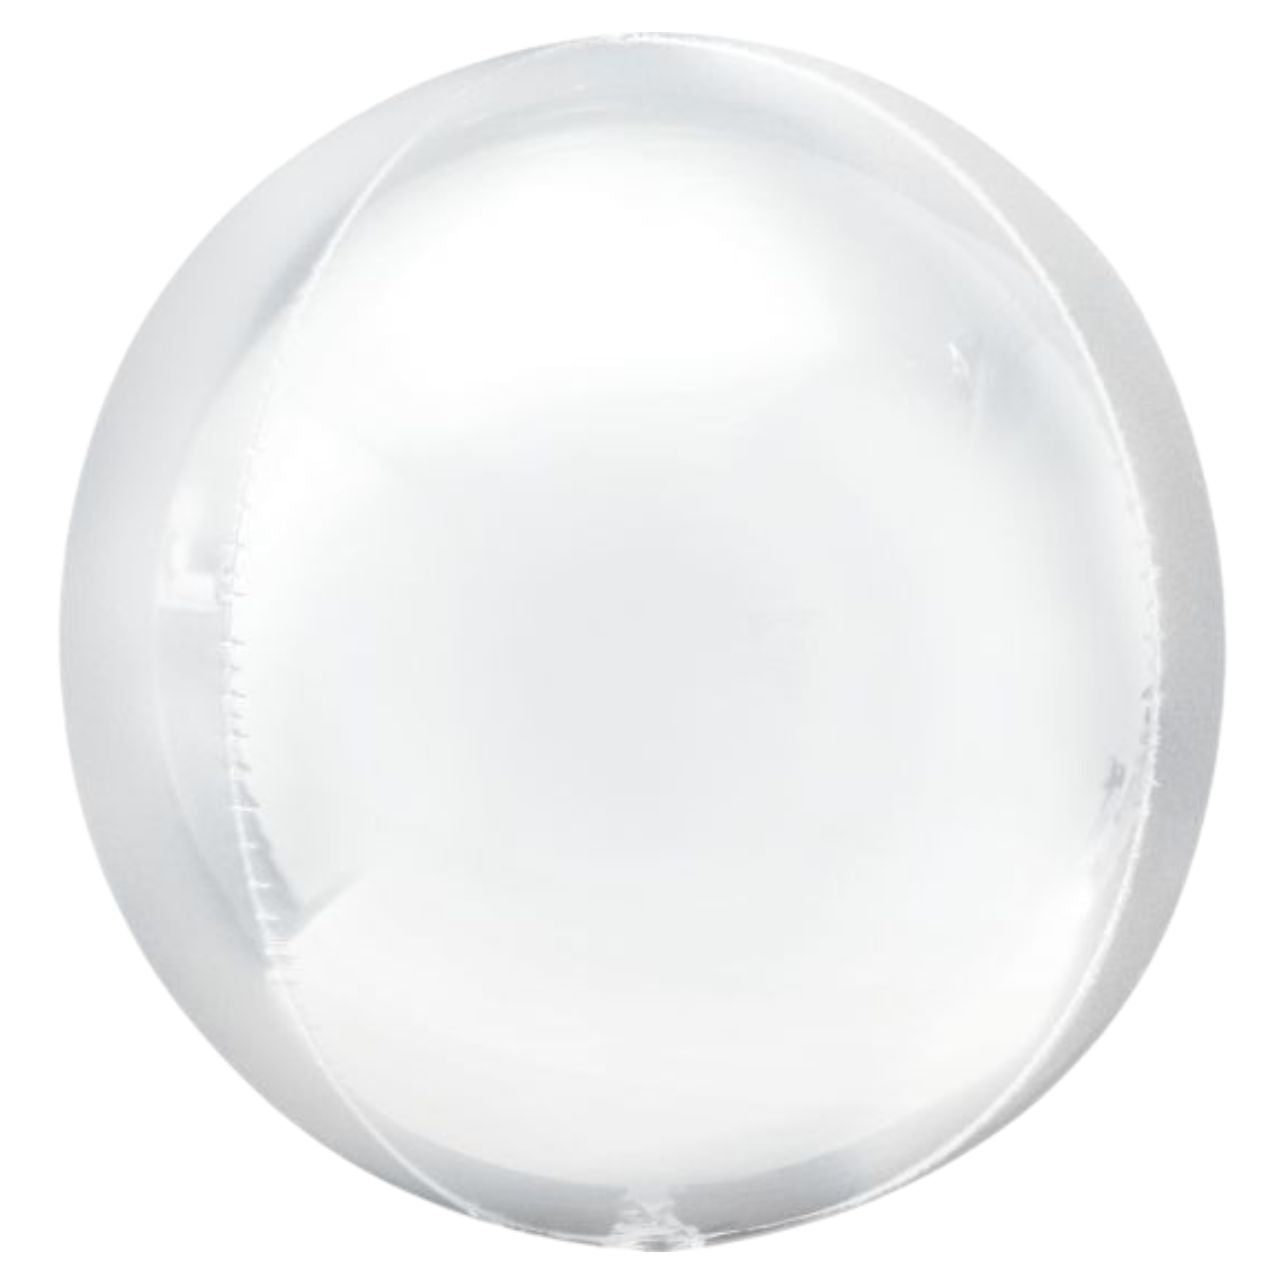 White Orbz Foil Balloon